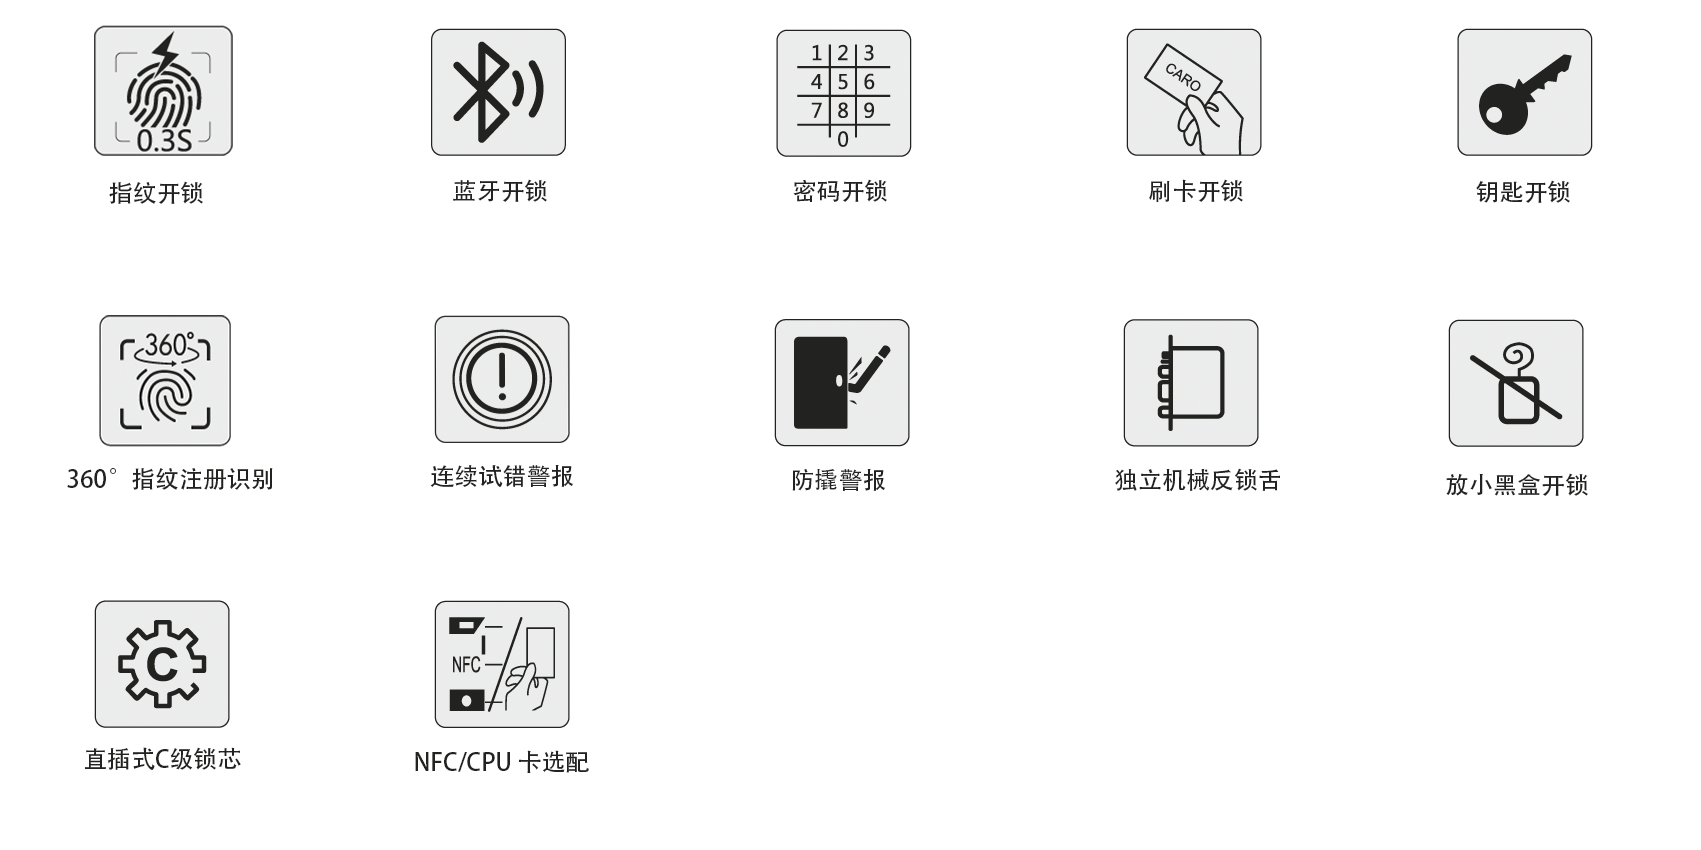 F560 产品特点 中文.png